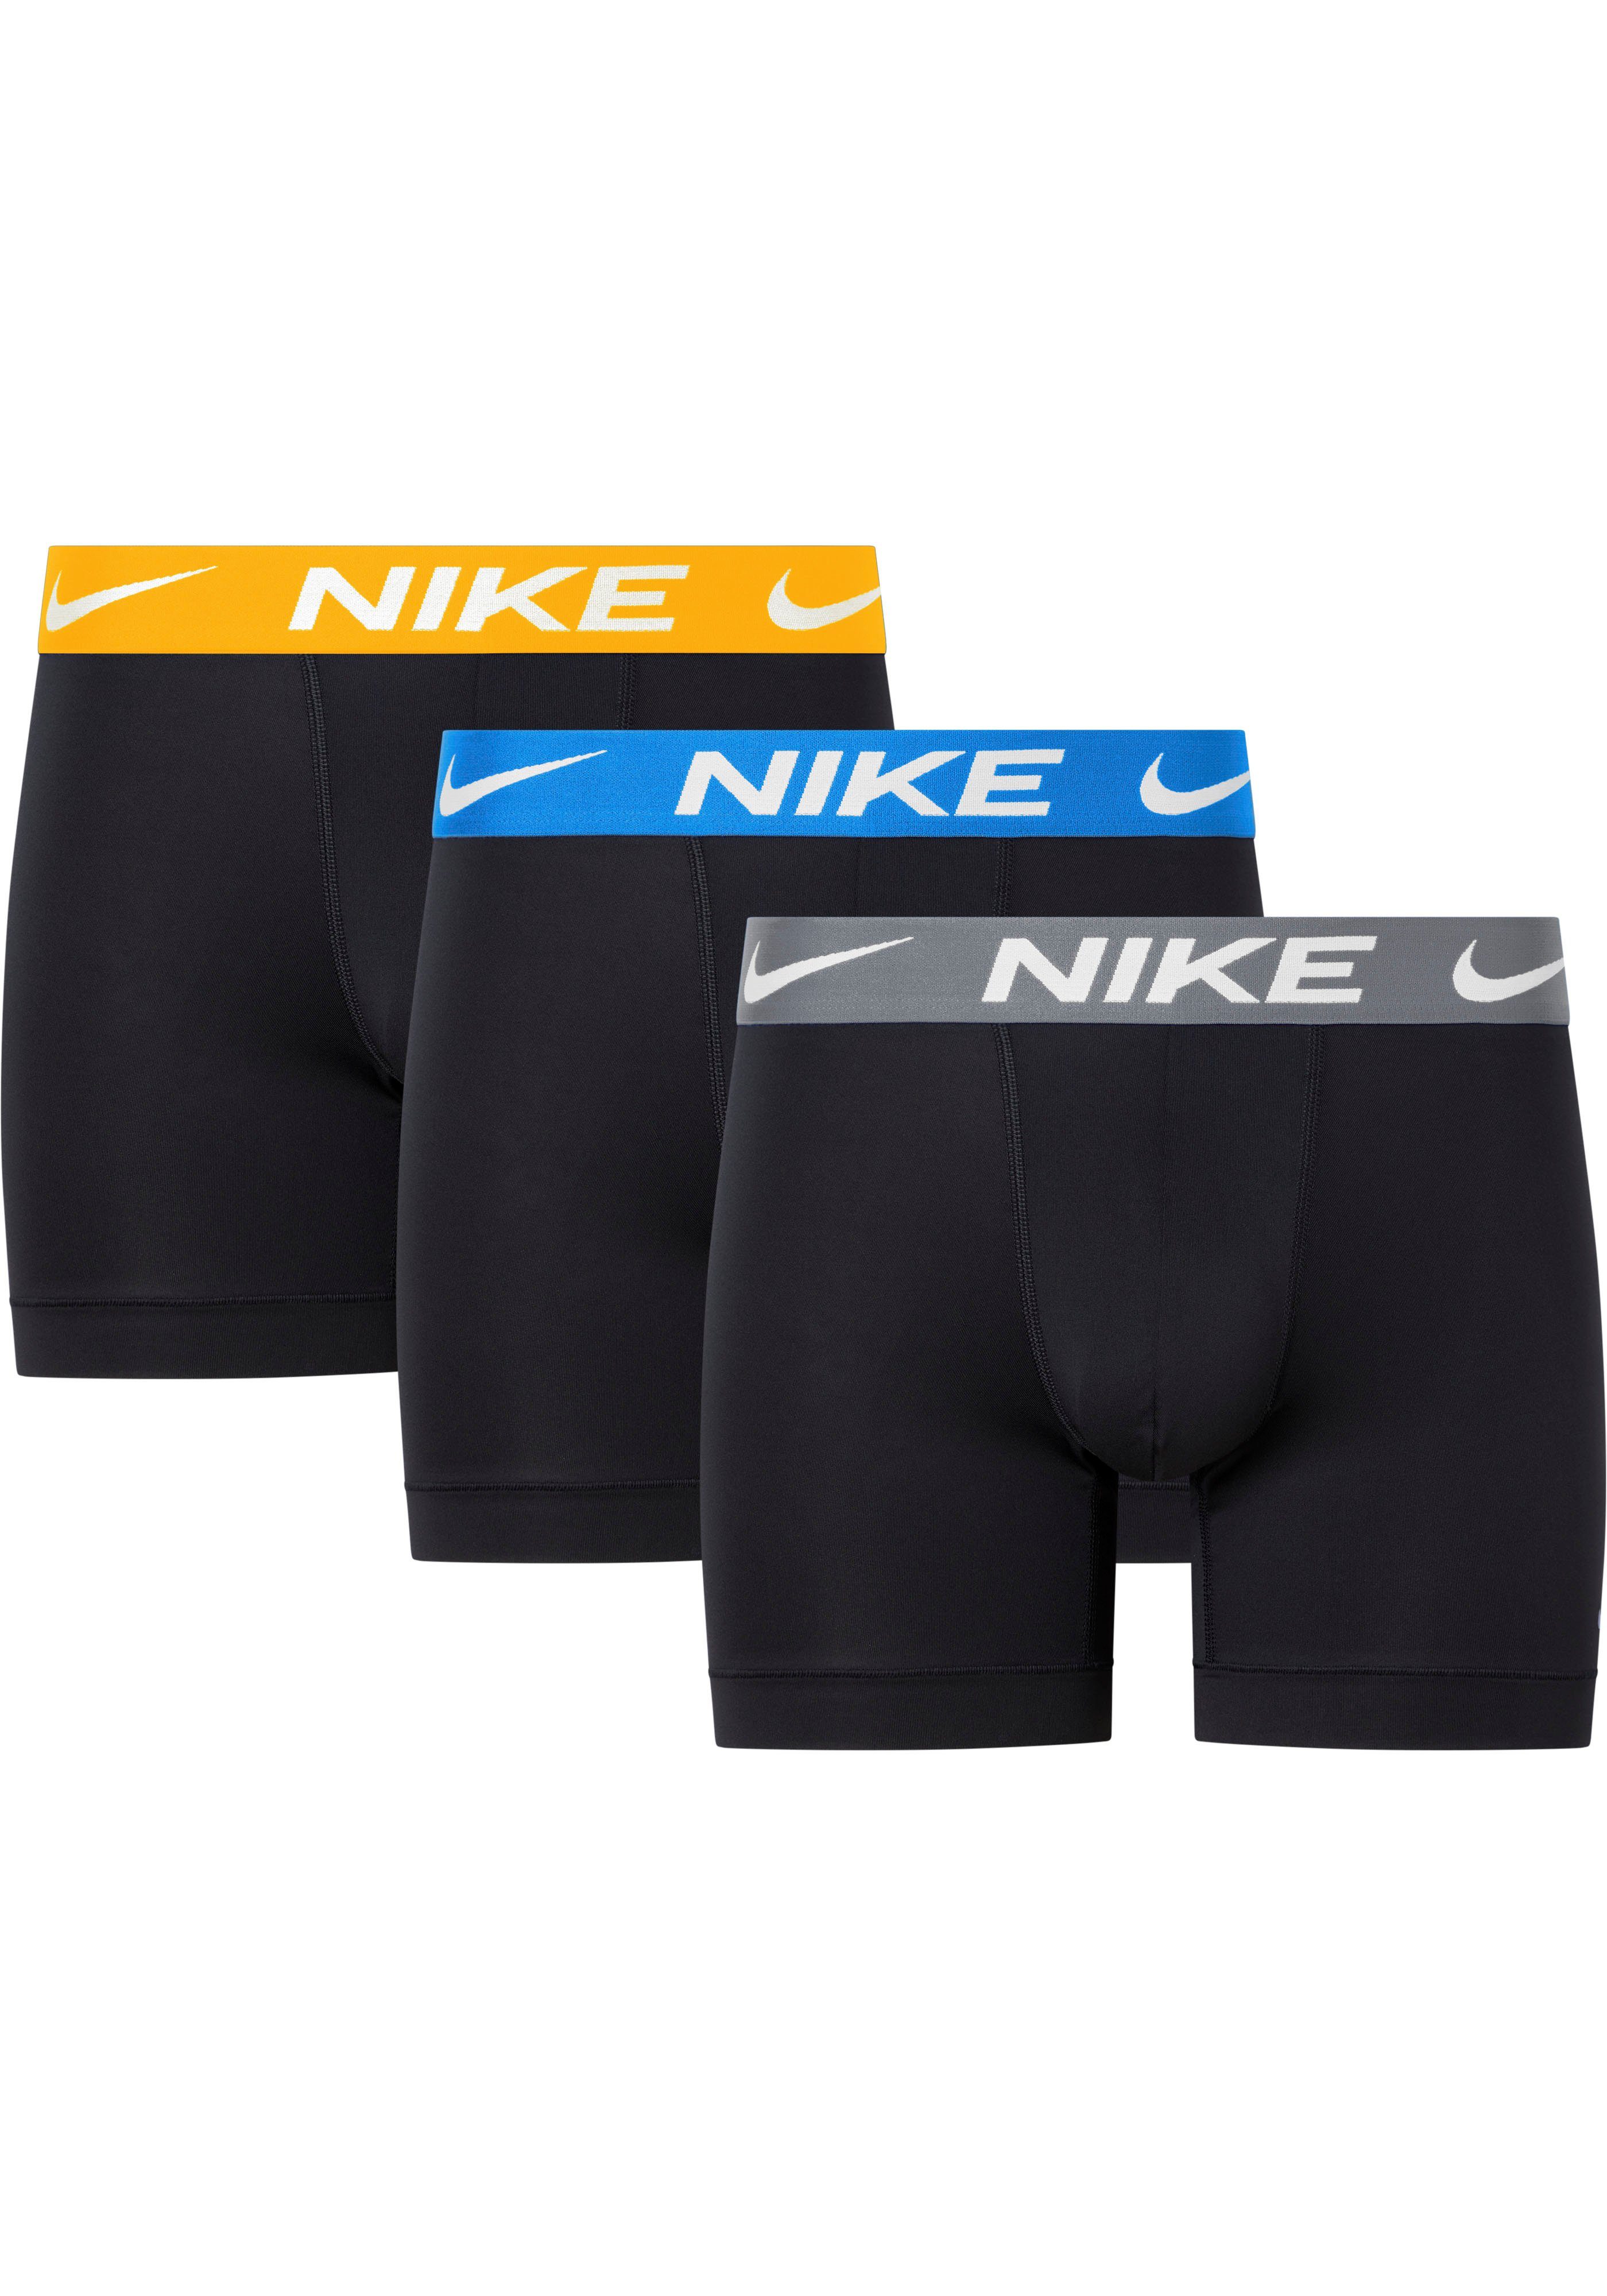 3PK BOXER BLACK/BLUE/COOL-GREY/TOTAL-ORANGE BRIEF 3-St., Boxer Logo-Elastikbund mit Nike (Packung, NIKE Underwear 3er-Pack)